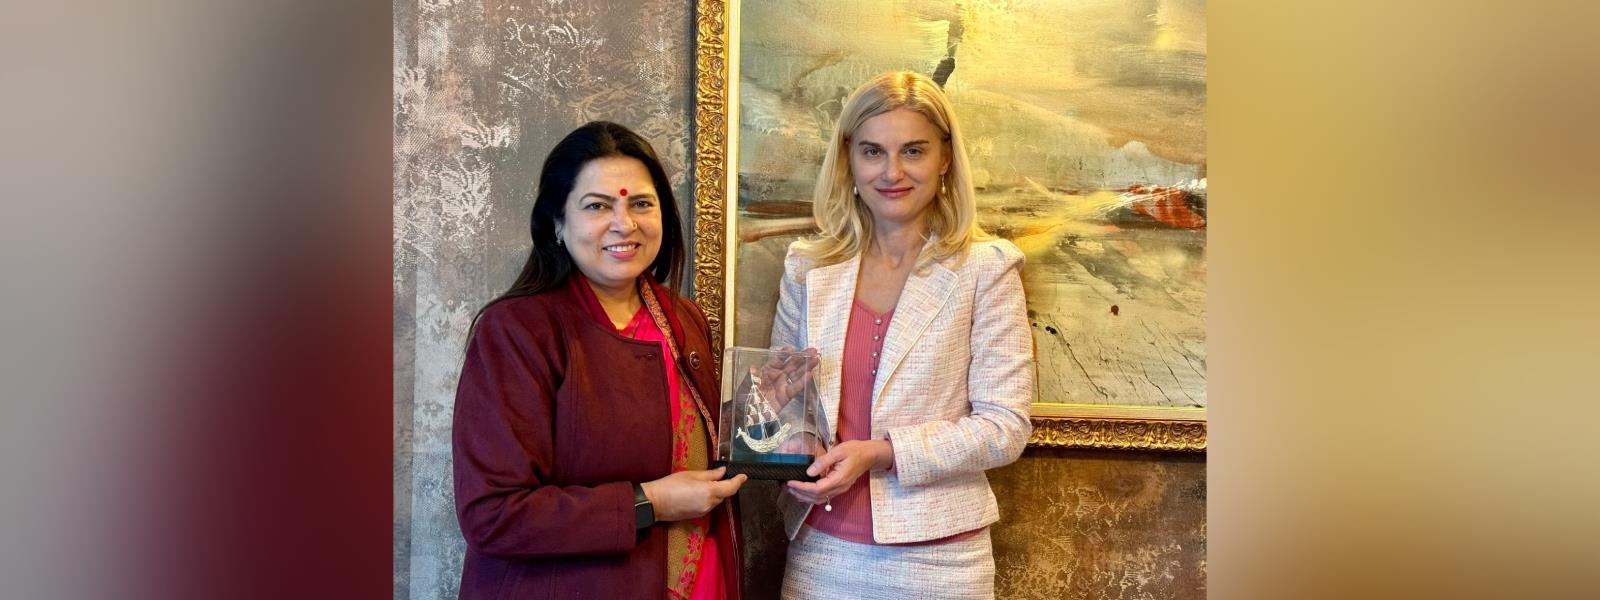 Minister of State for External Affairs Smt. Meenakashi Lekhi met H.E. Ms. Zaritsa Dinkova, Minister of Tourism of Bulgaria in Sofia